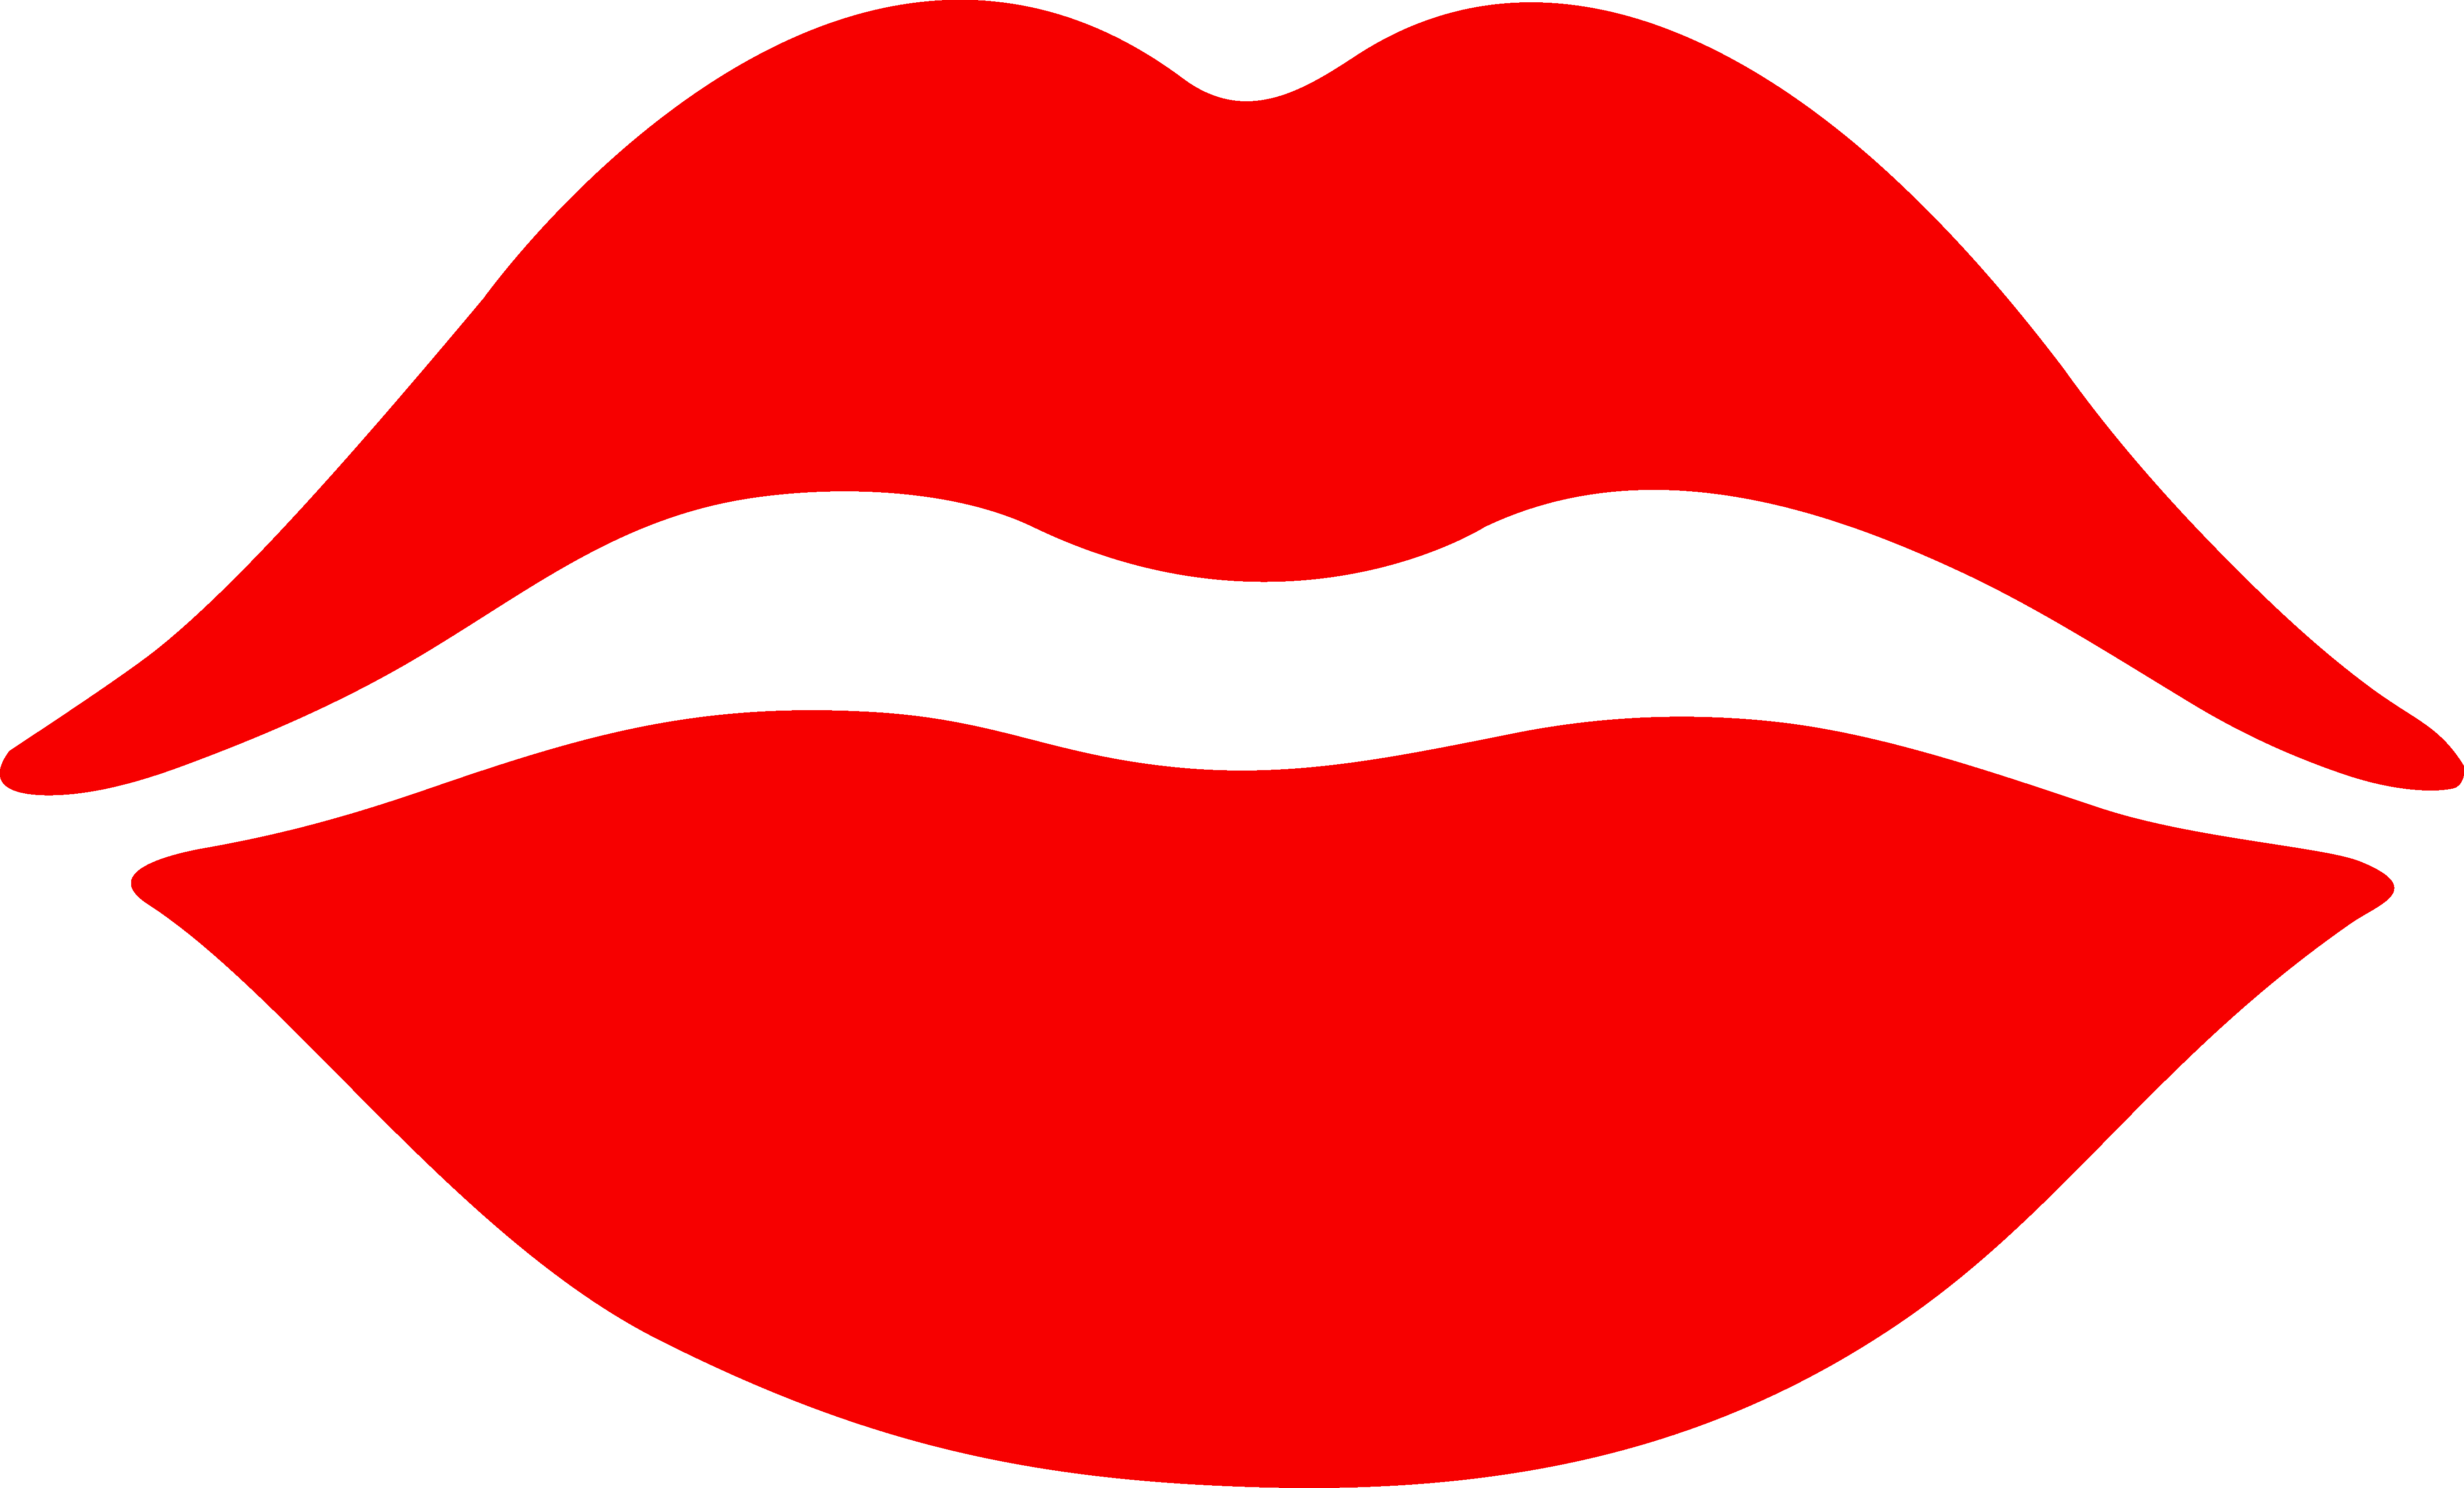 Simple Red Lips Design Free Clip Art - 5428x3277 pixel Wallpaper ...